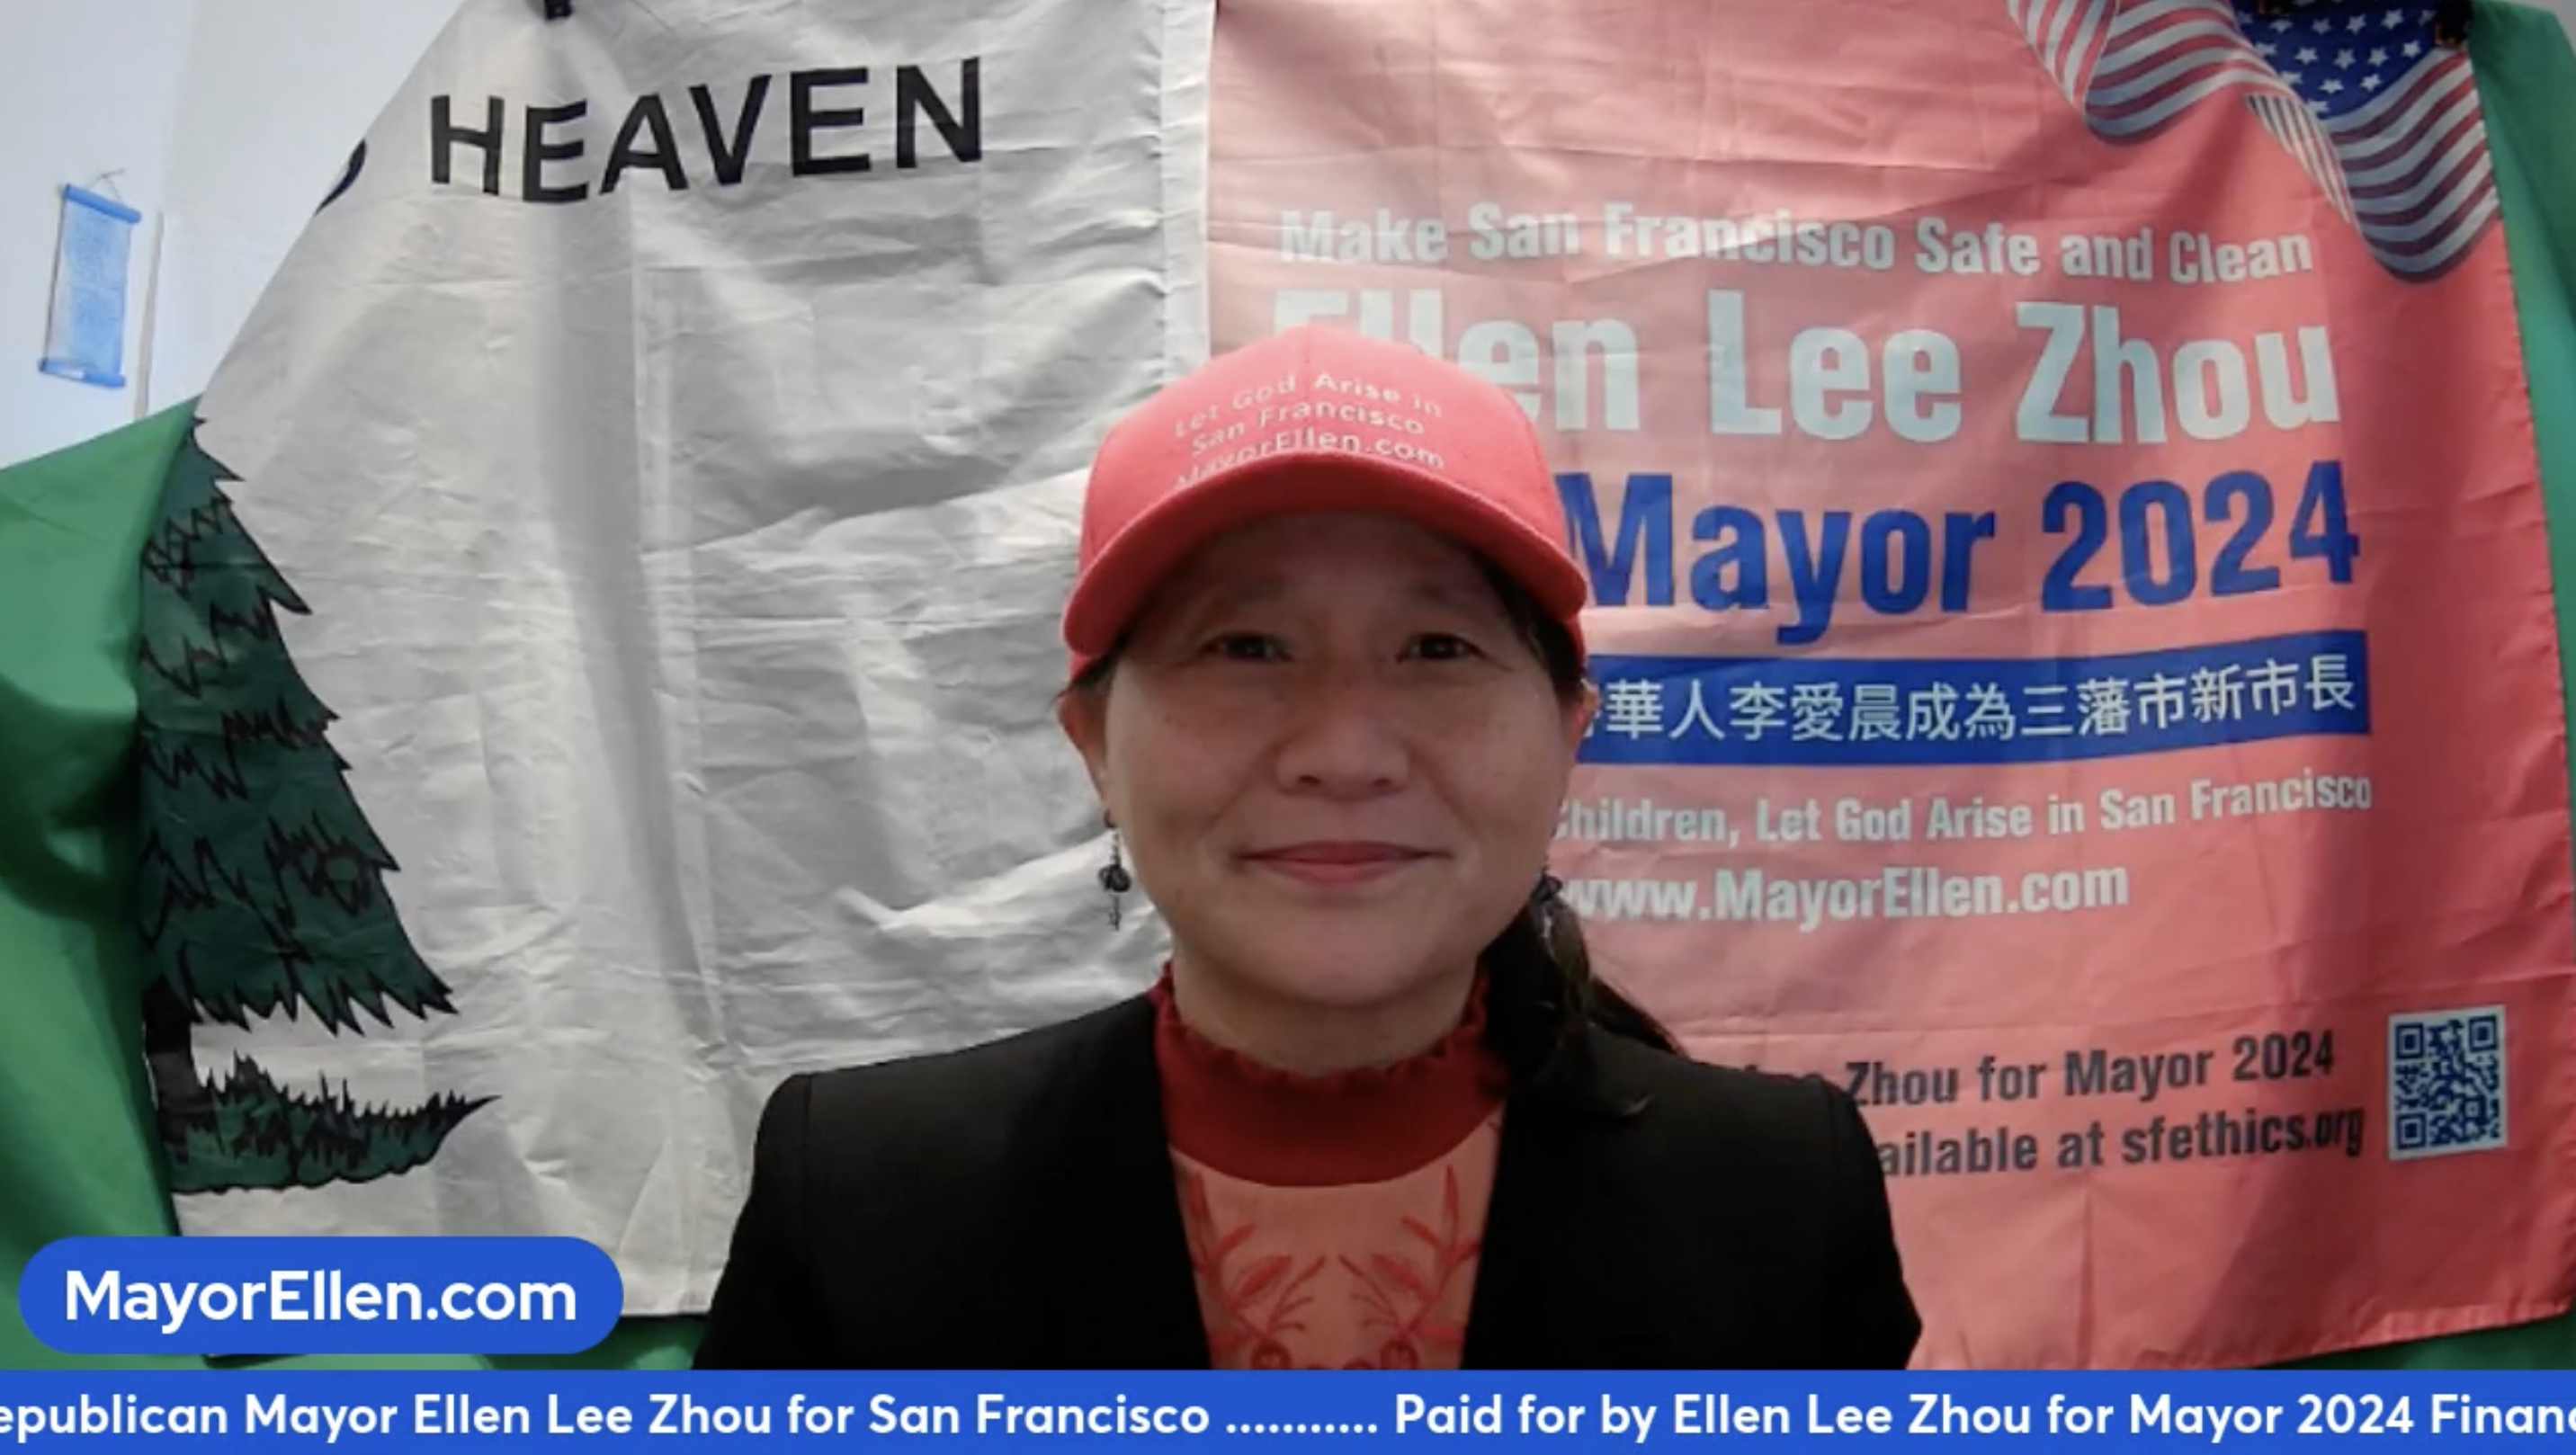 Republican Mayor Ellen Lee Zhou for San Francisco